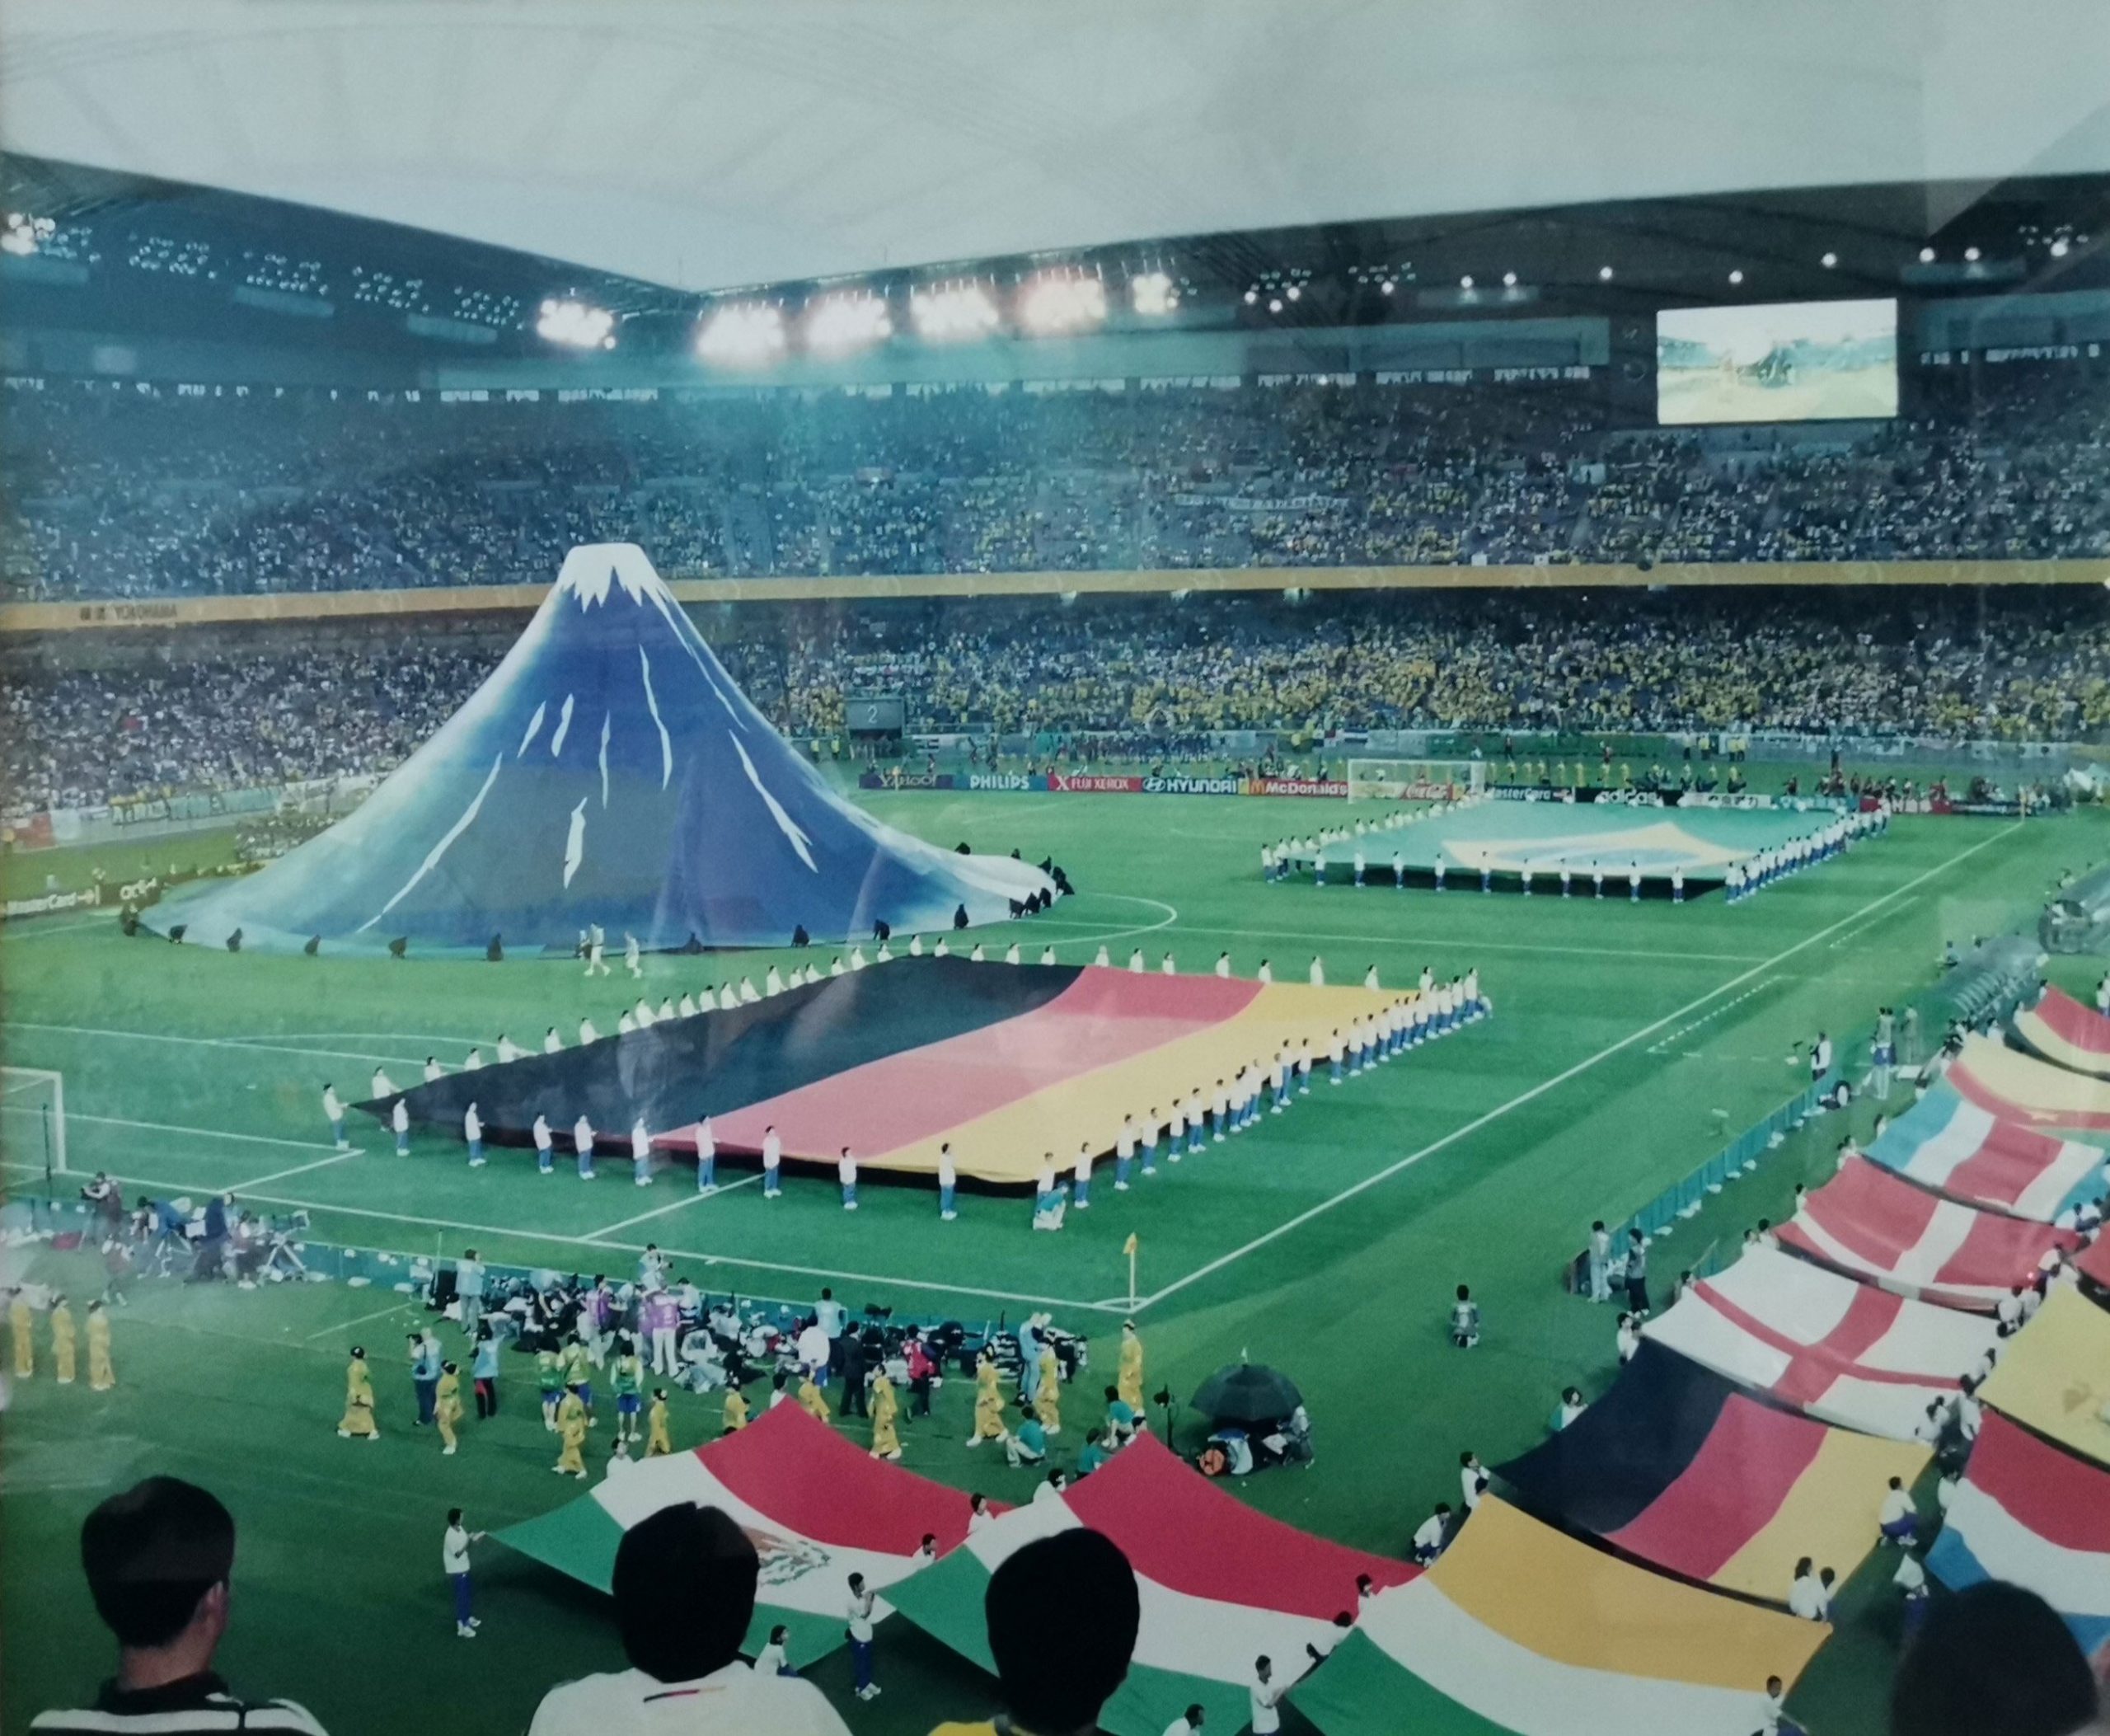 2002 FIFA World Cup Korea/Japan